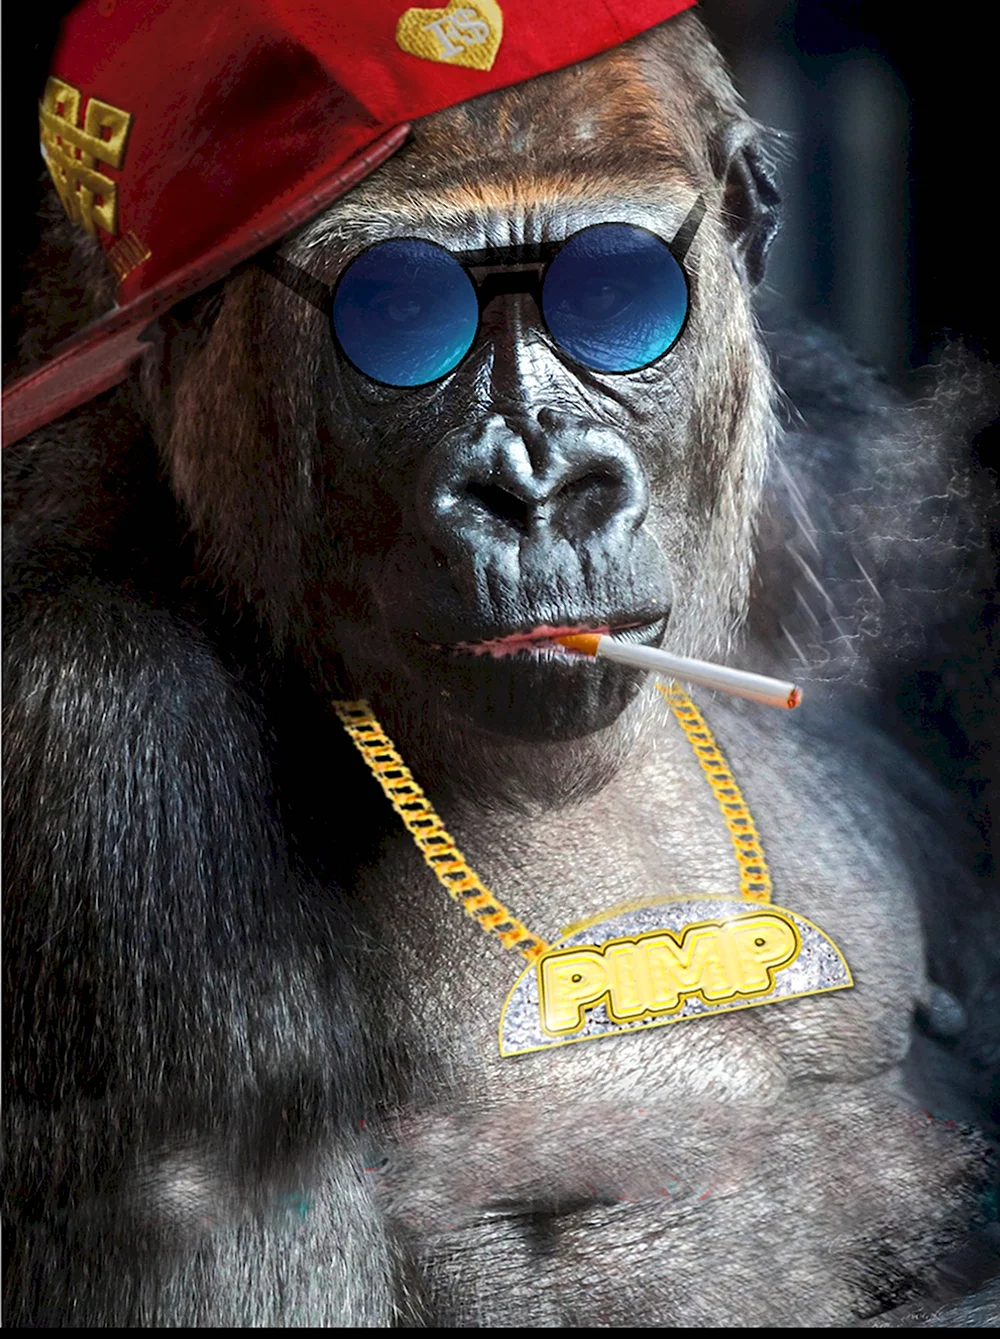 Monkey с сигарой